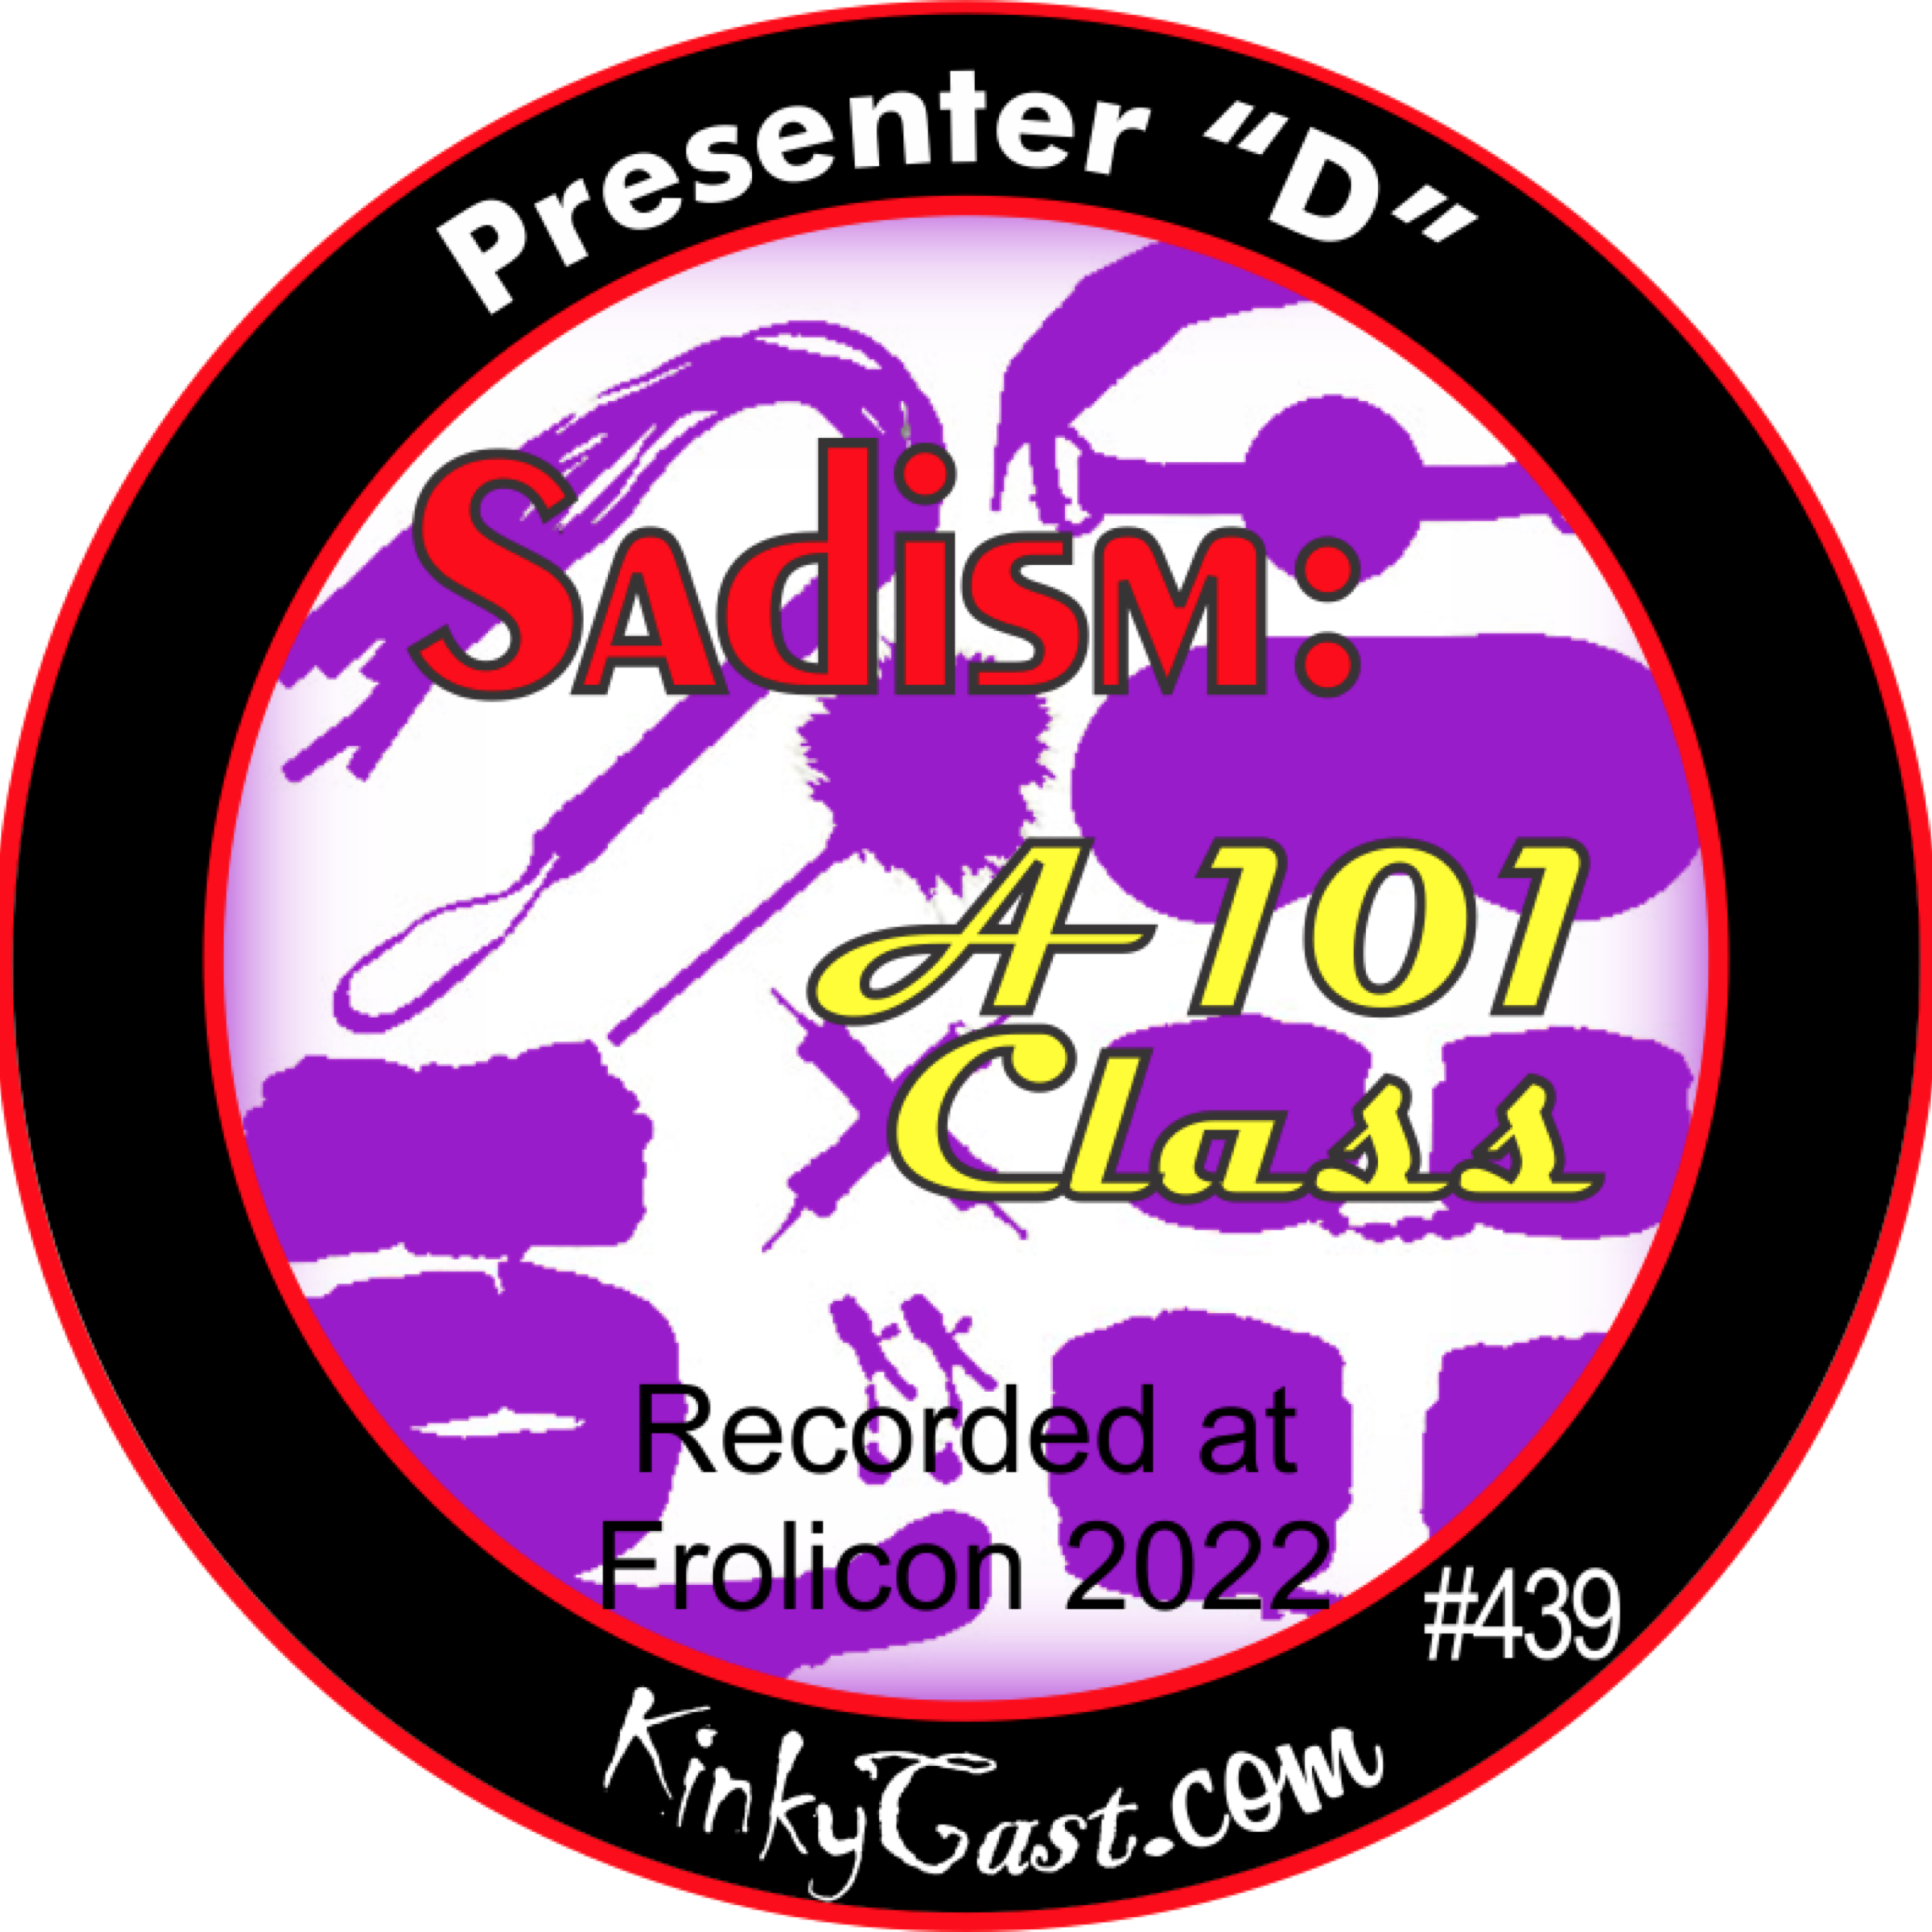 #439 - ”D” on Sadism 101